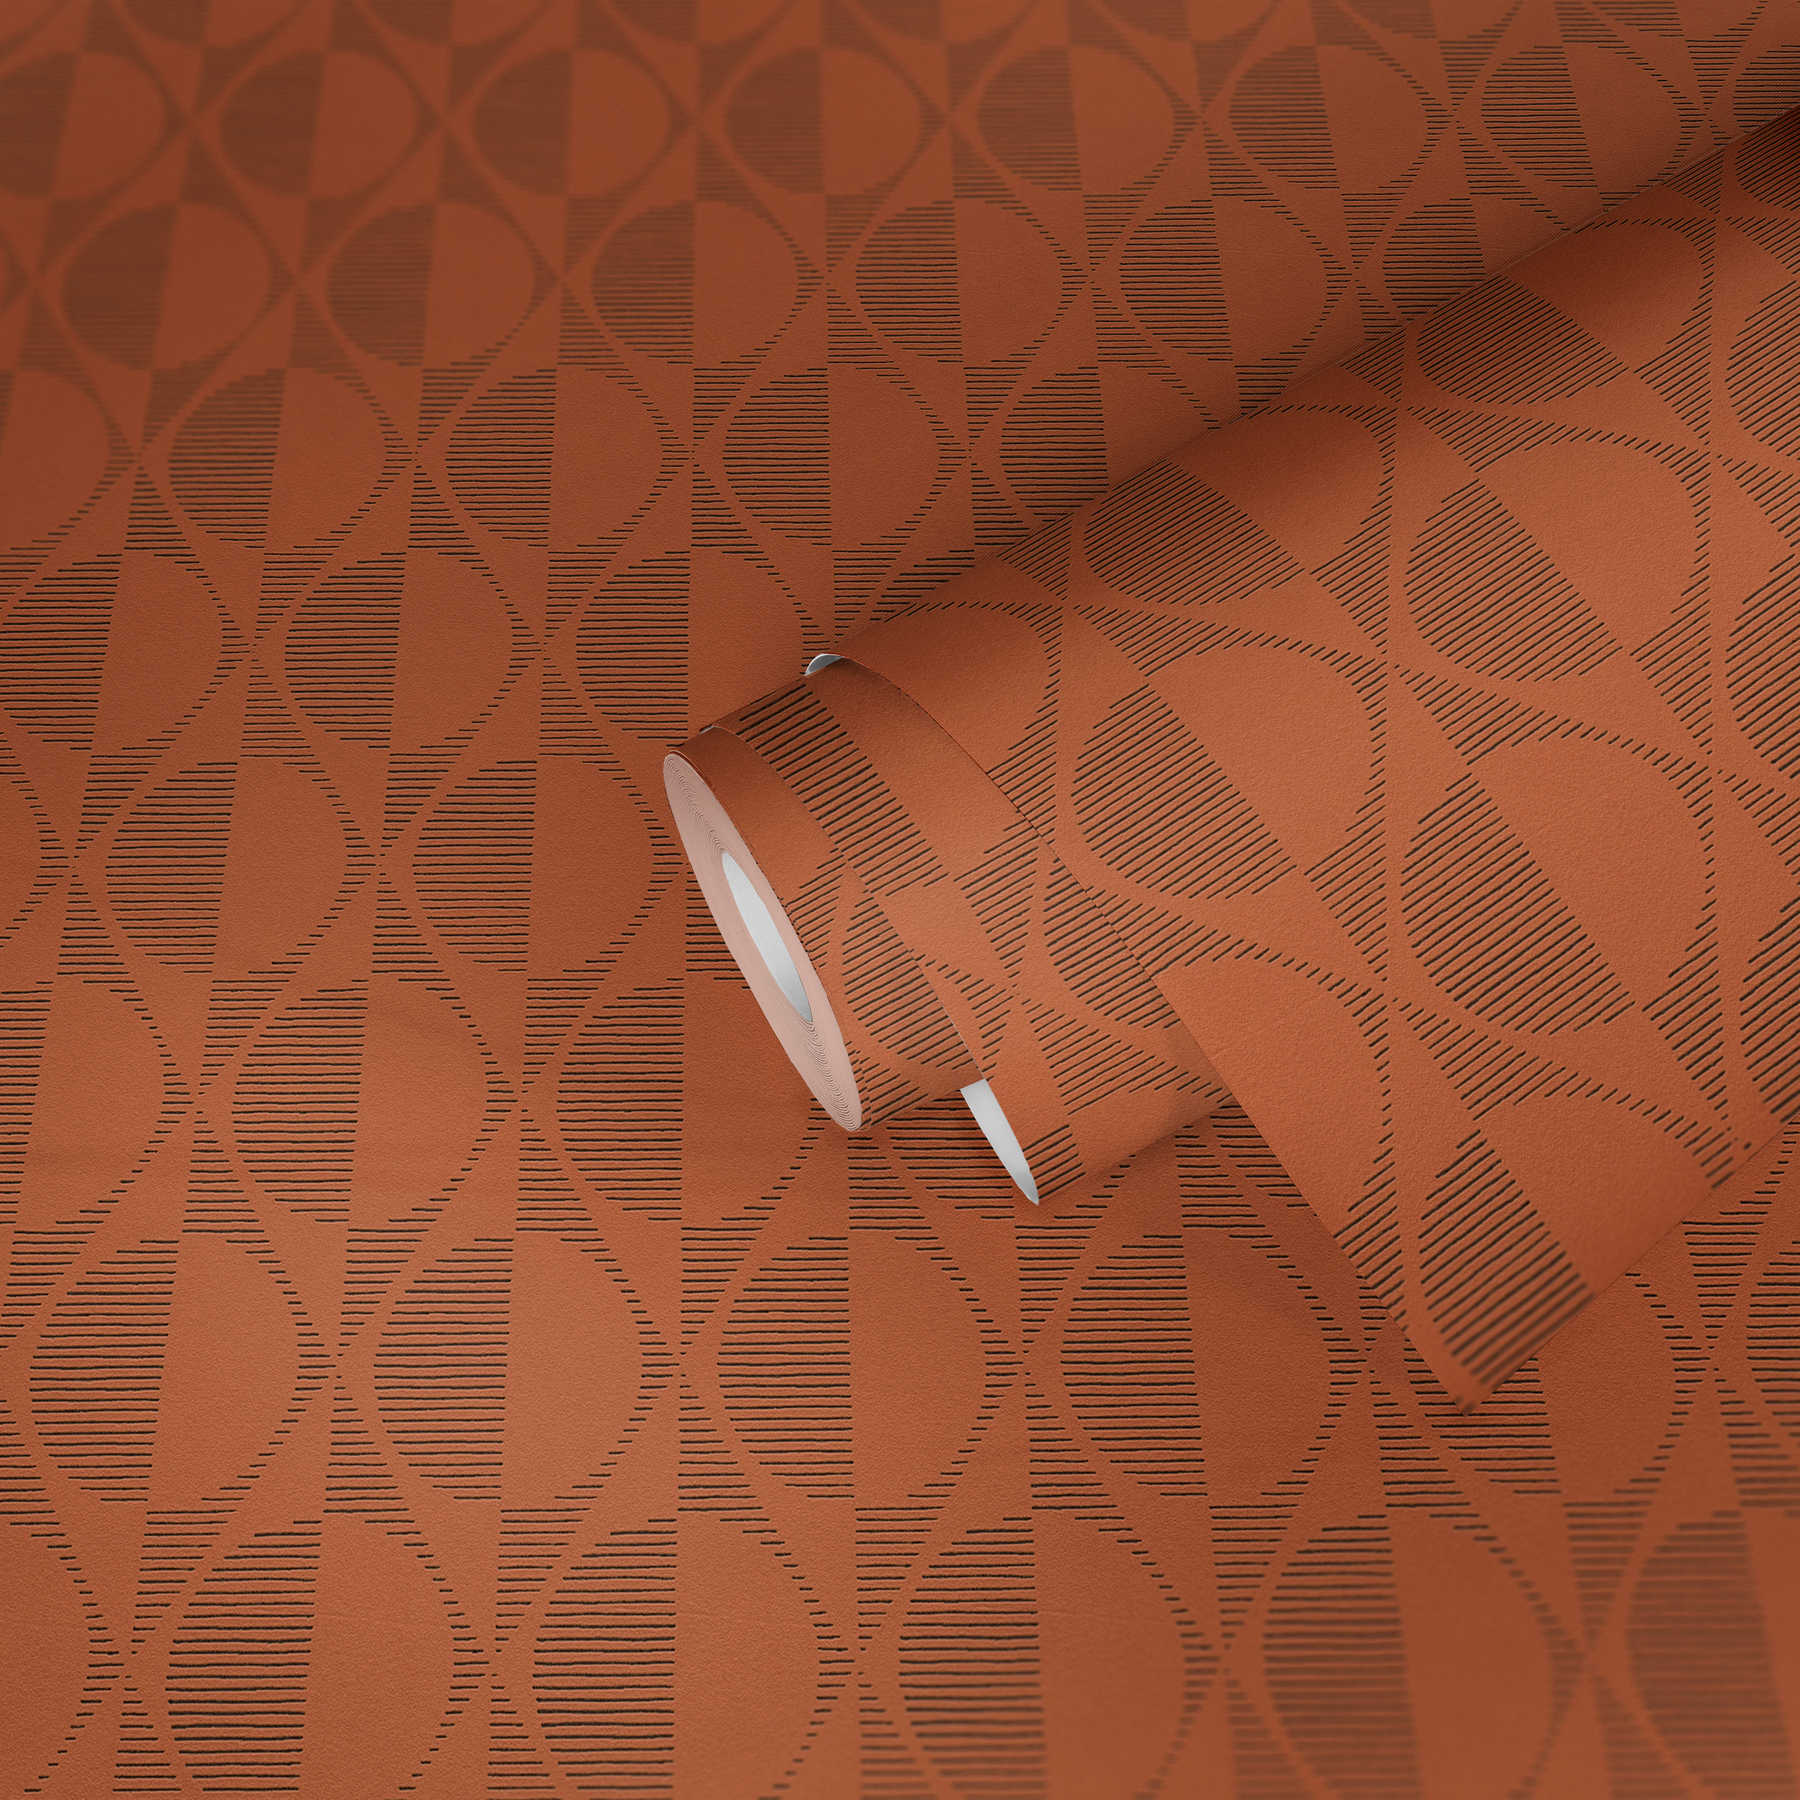             Retro wallpaper with circle and diamond pattern - orange, black
        